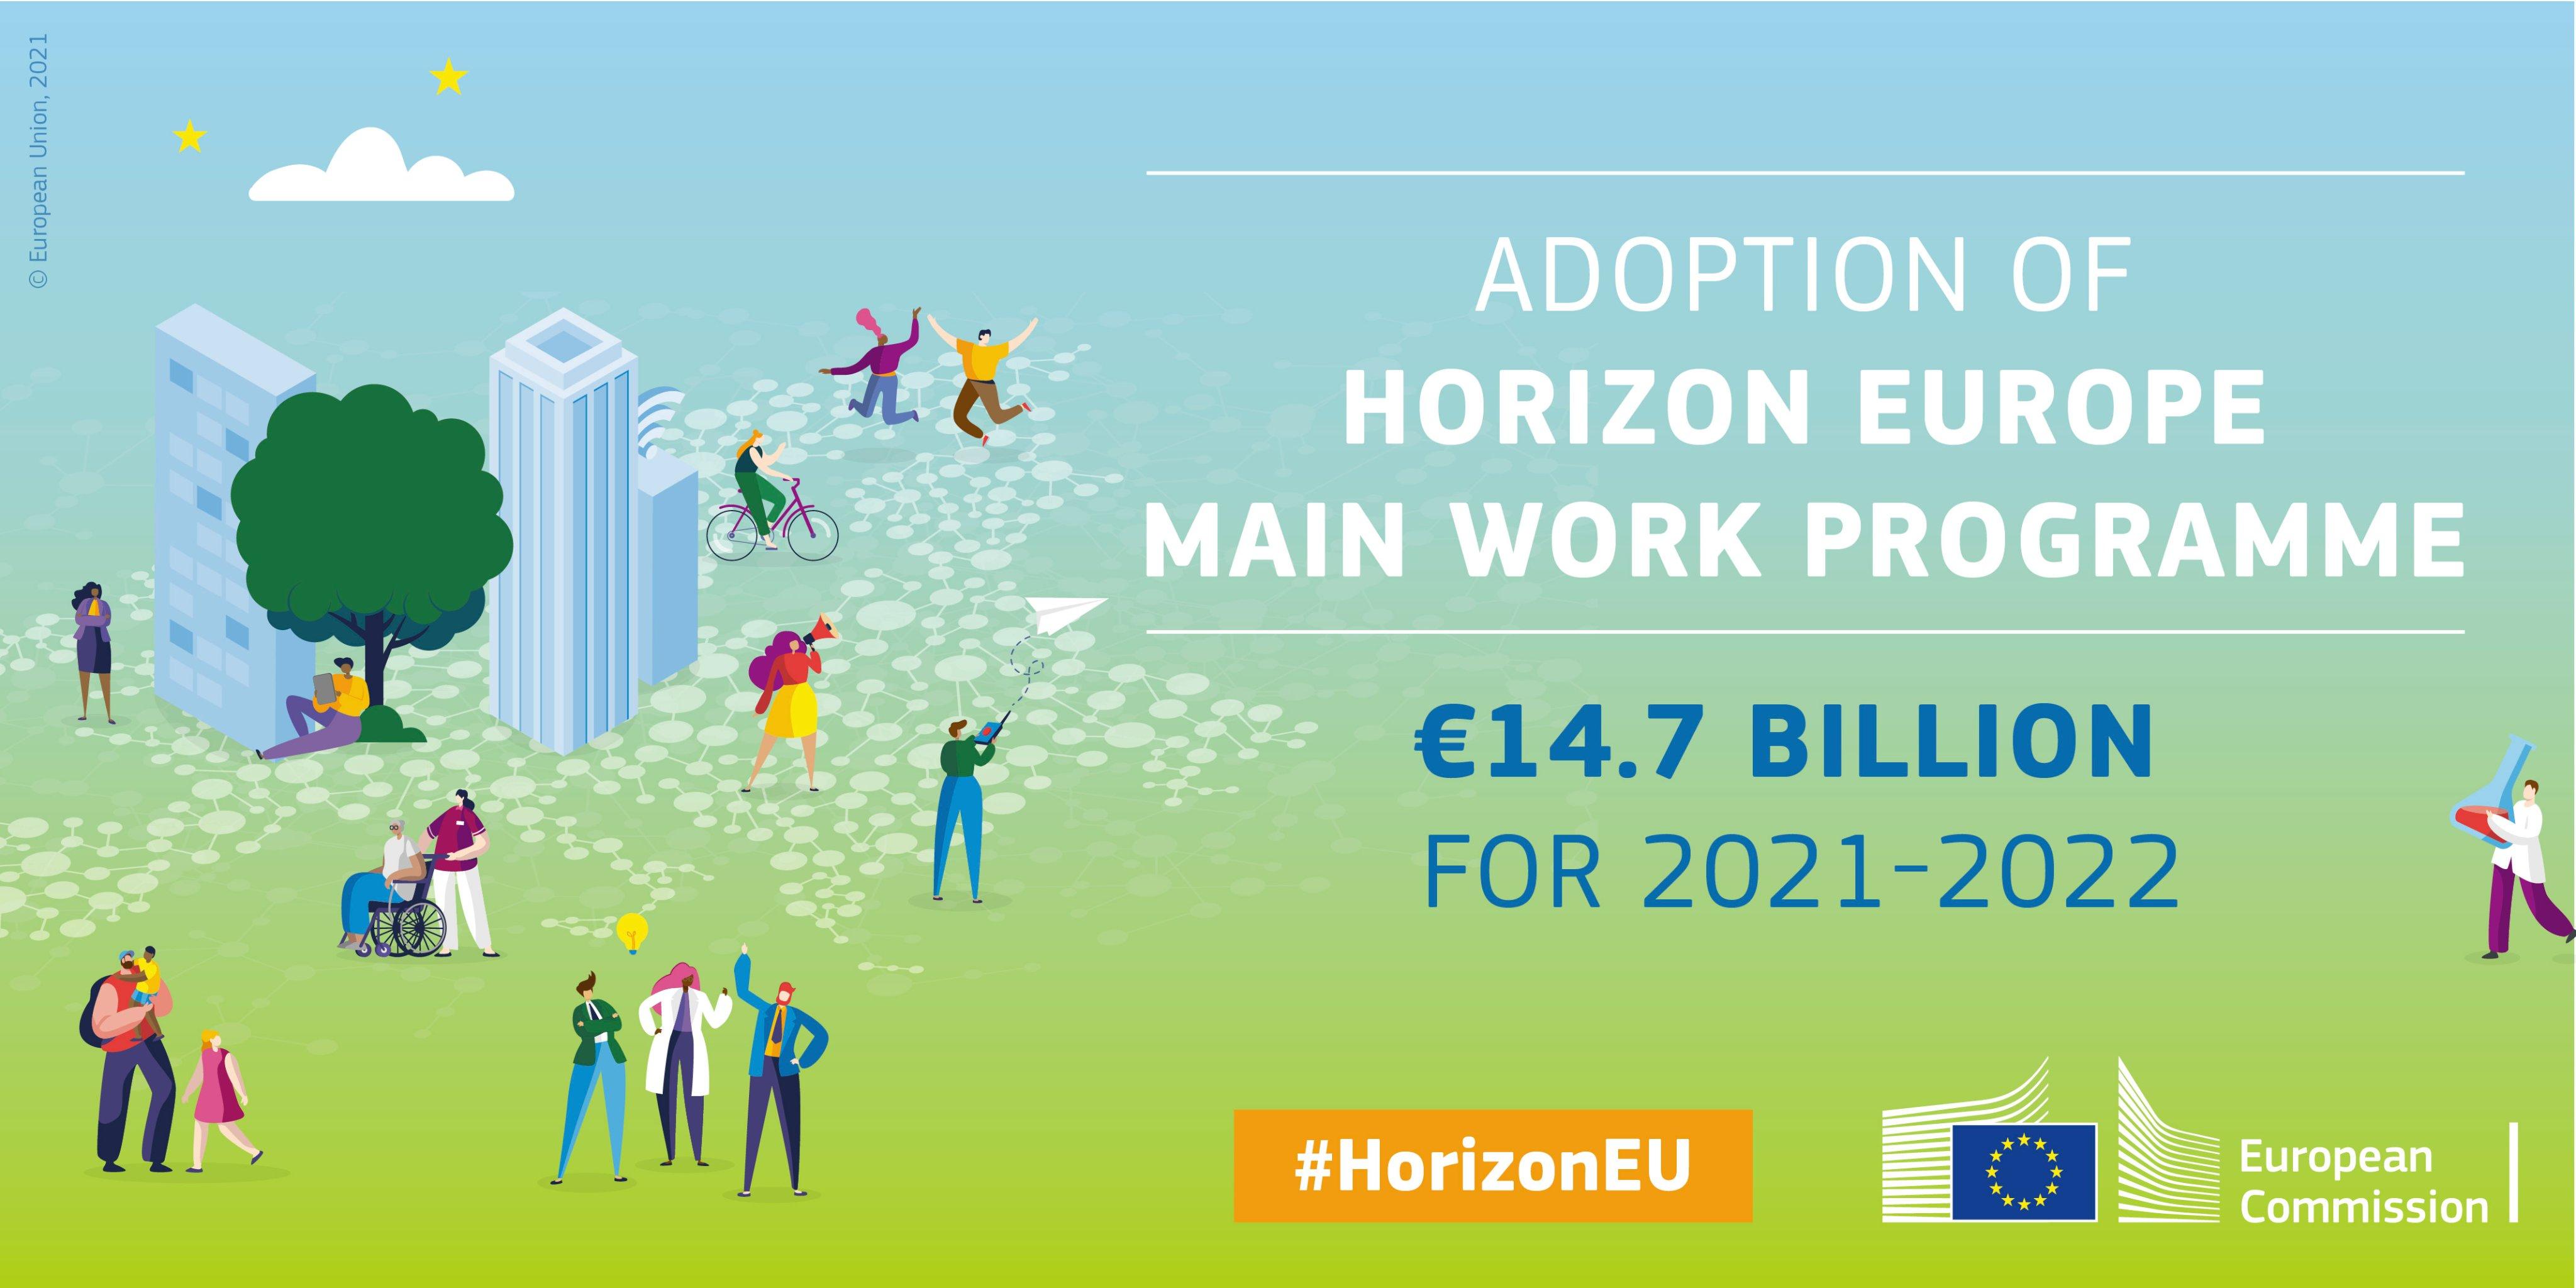 Main Horizon Europe work programme adopted